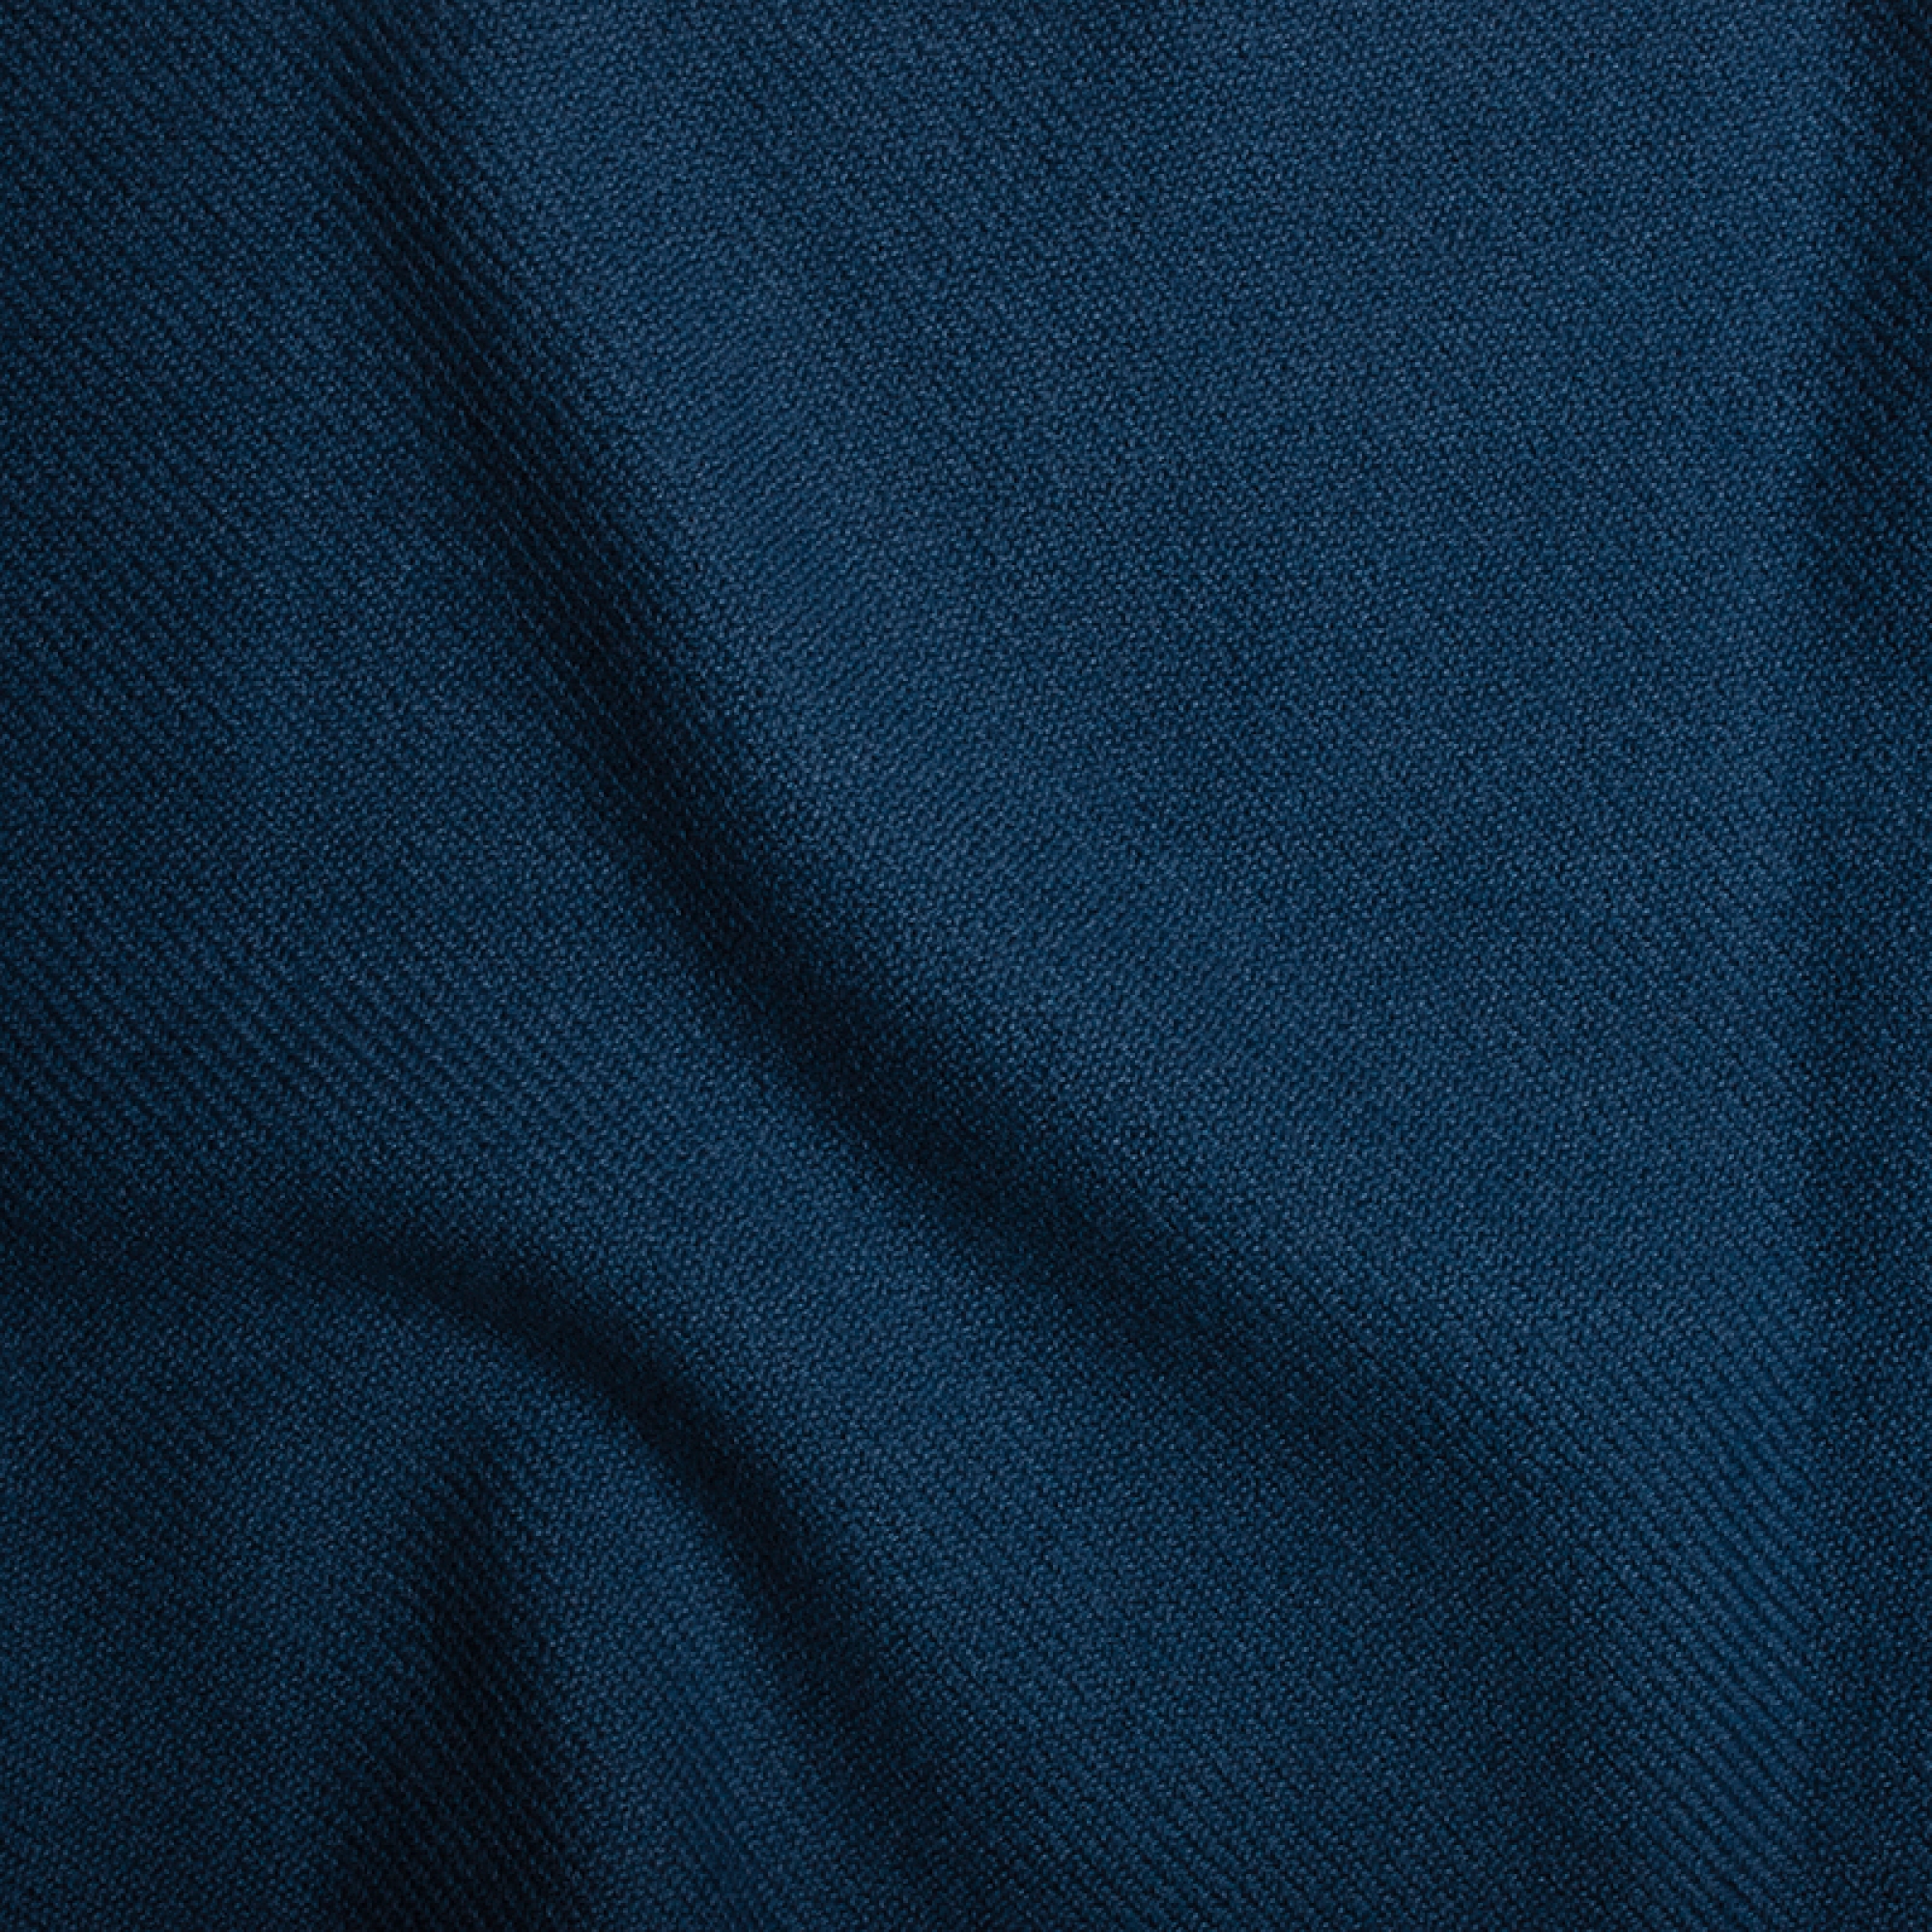 Cachemire pull homme toodoo plain xl 240 x 260 bleu prusse 240 x 260 cm